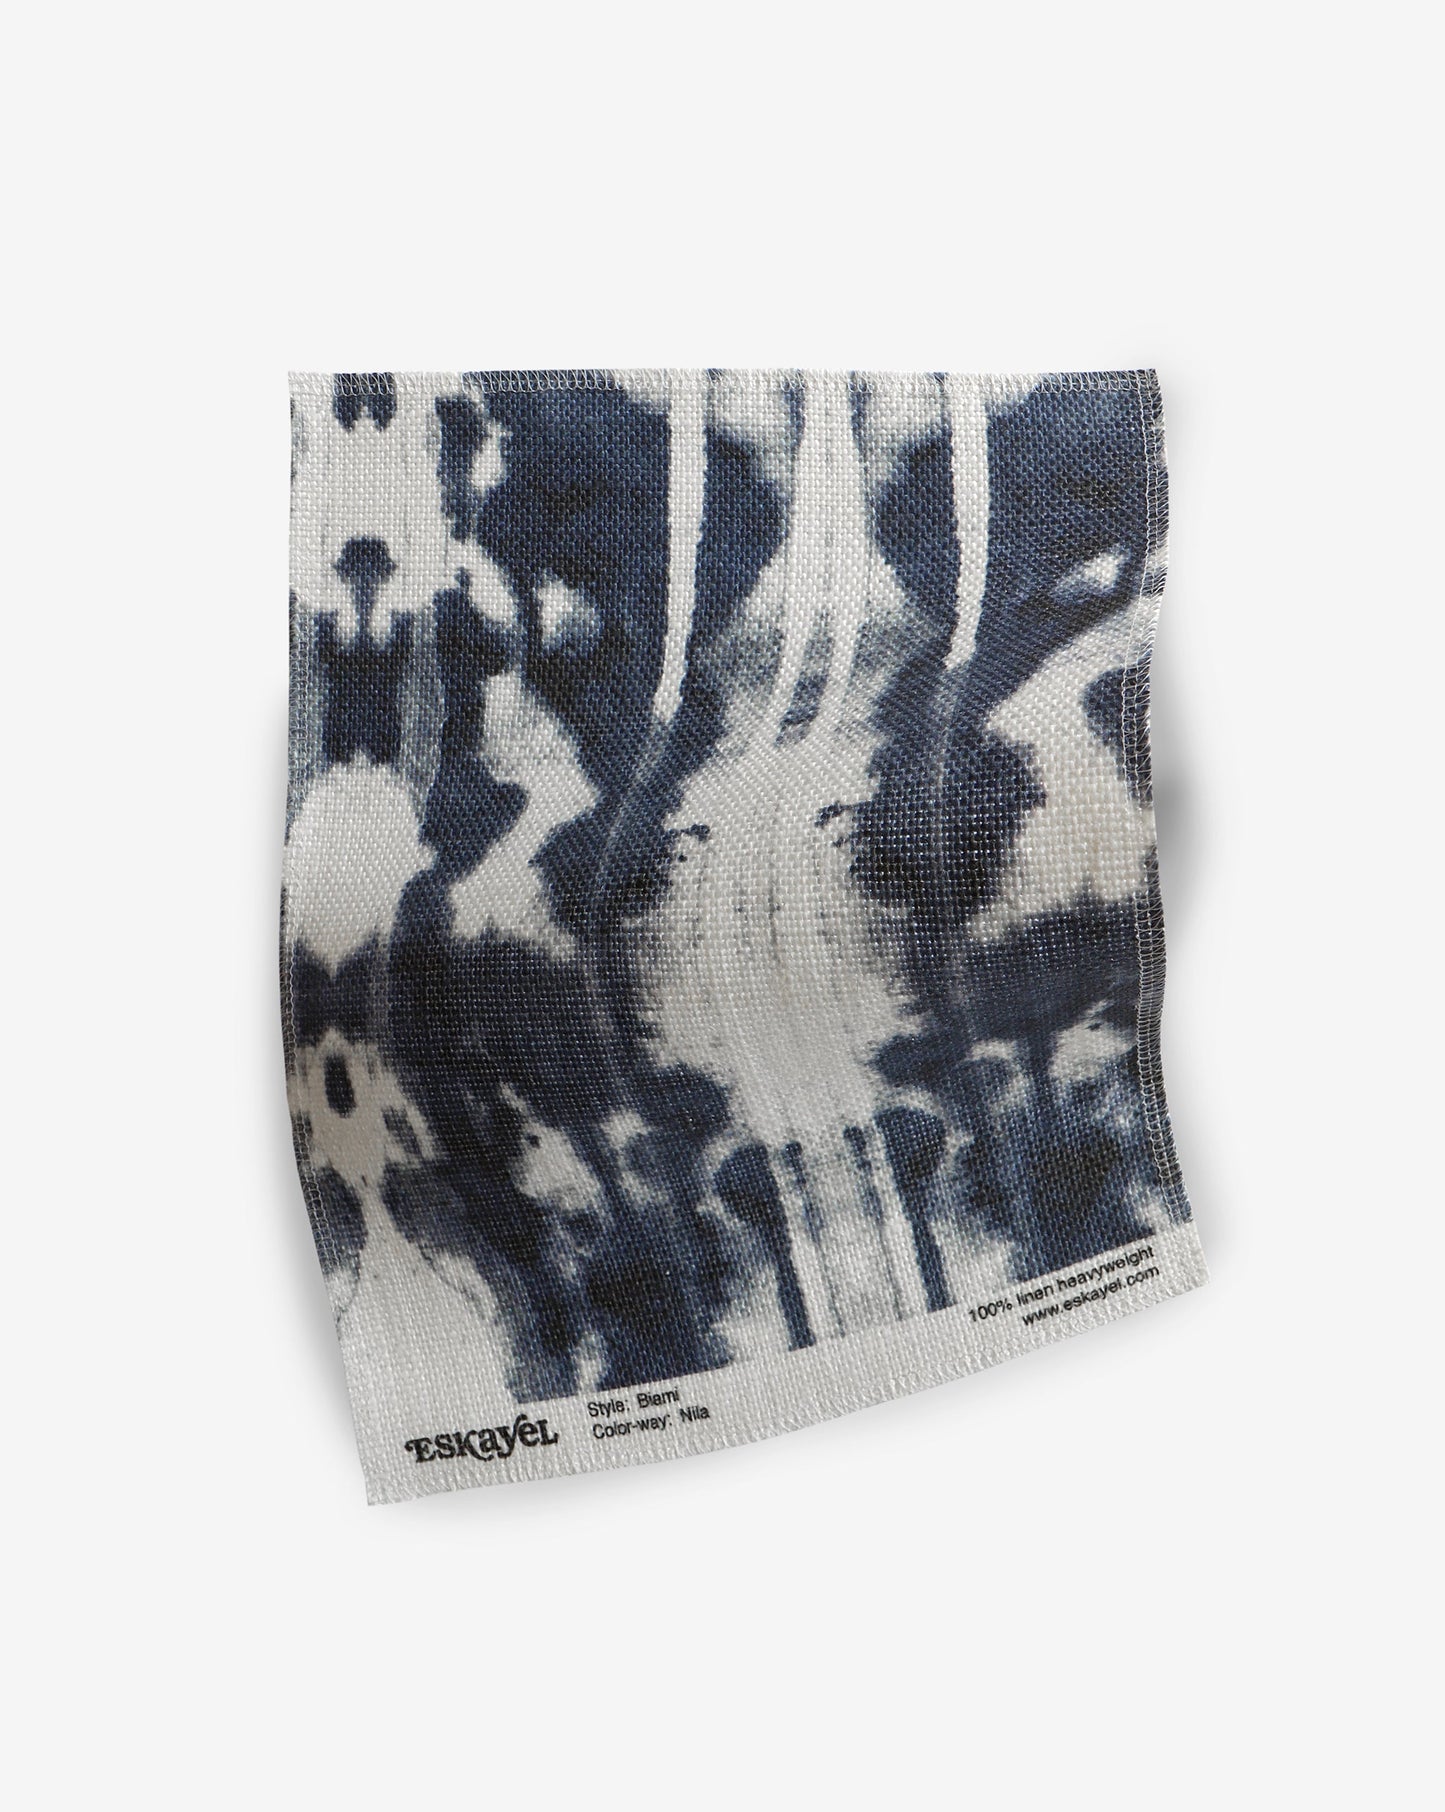 Biami Fabric Sample||Nila